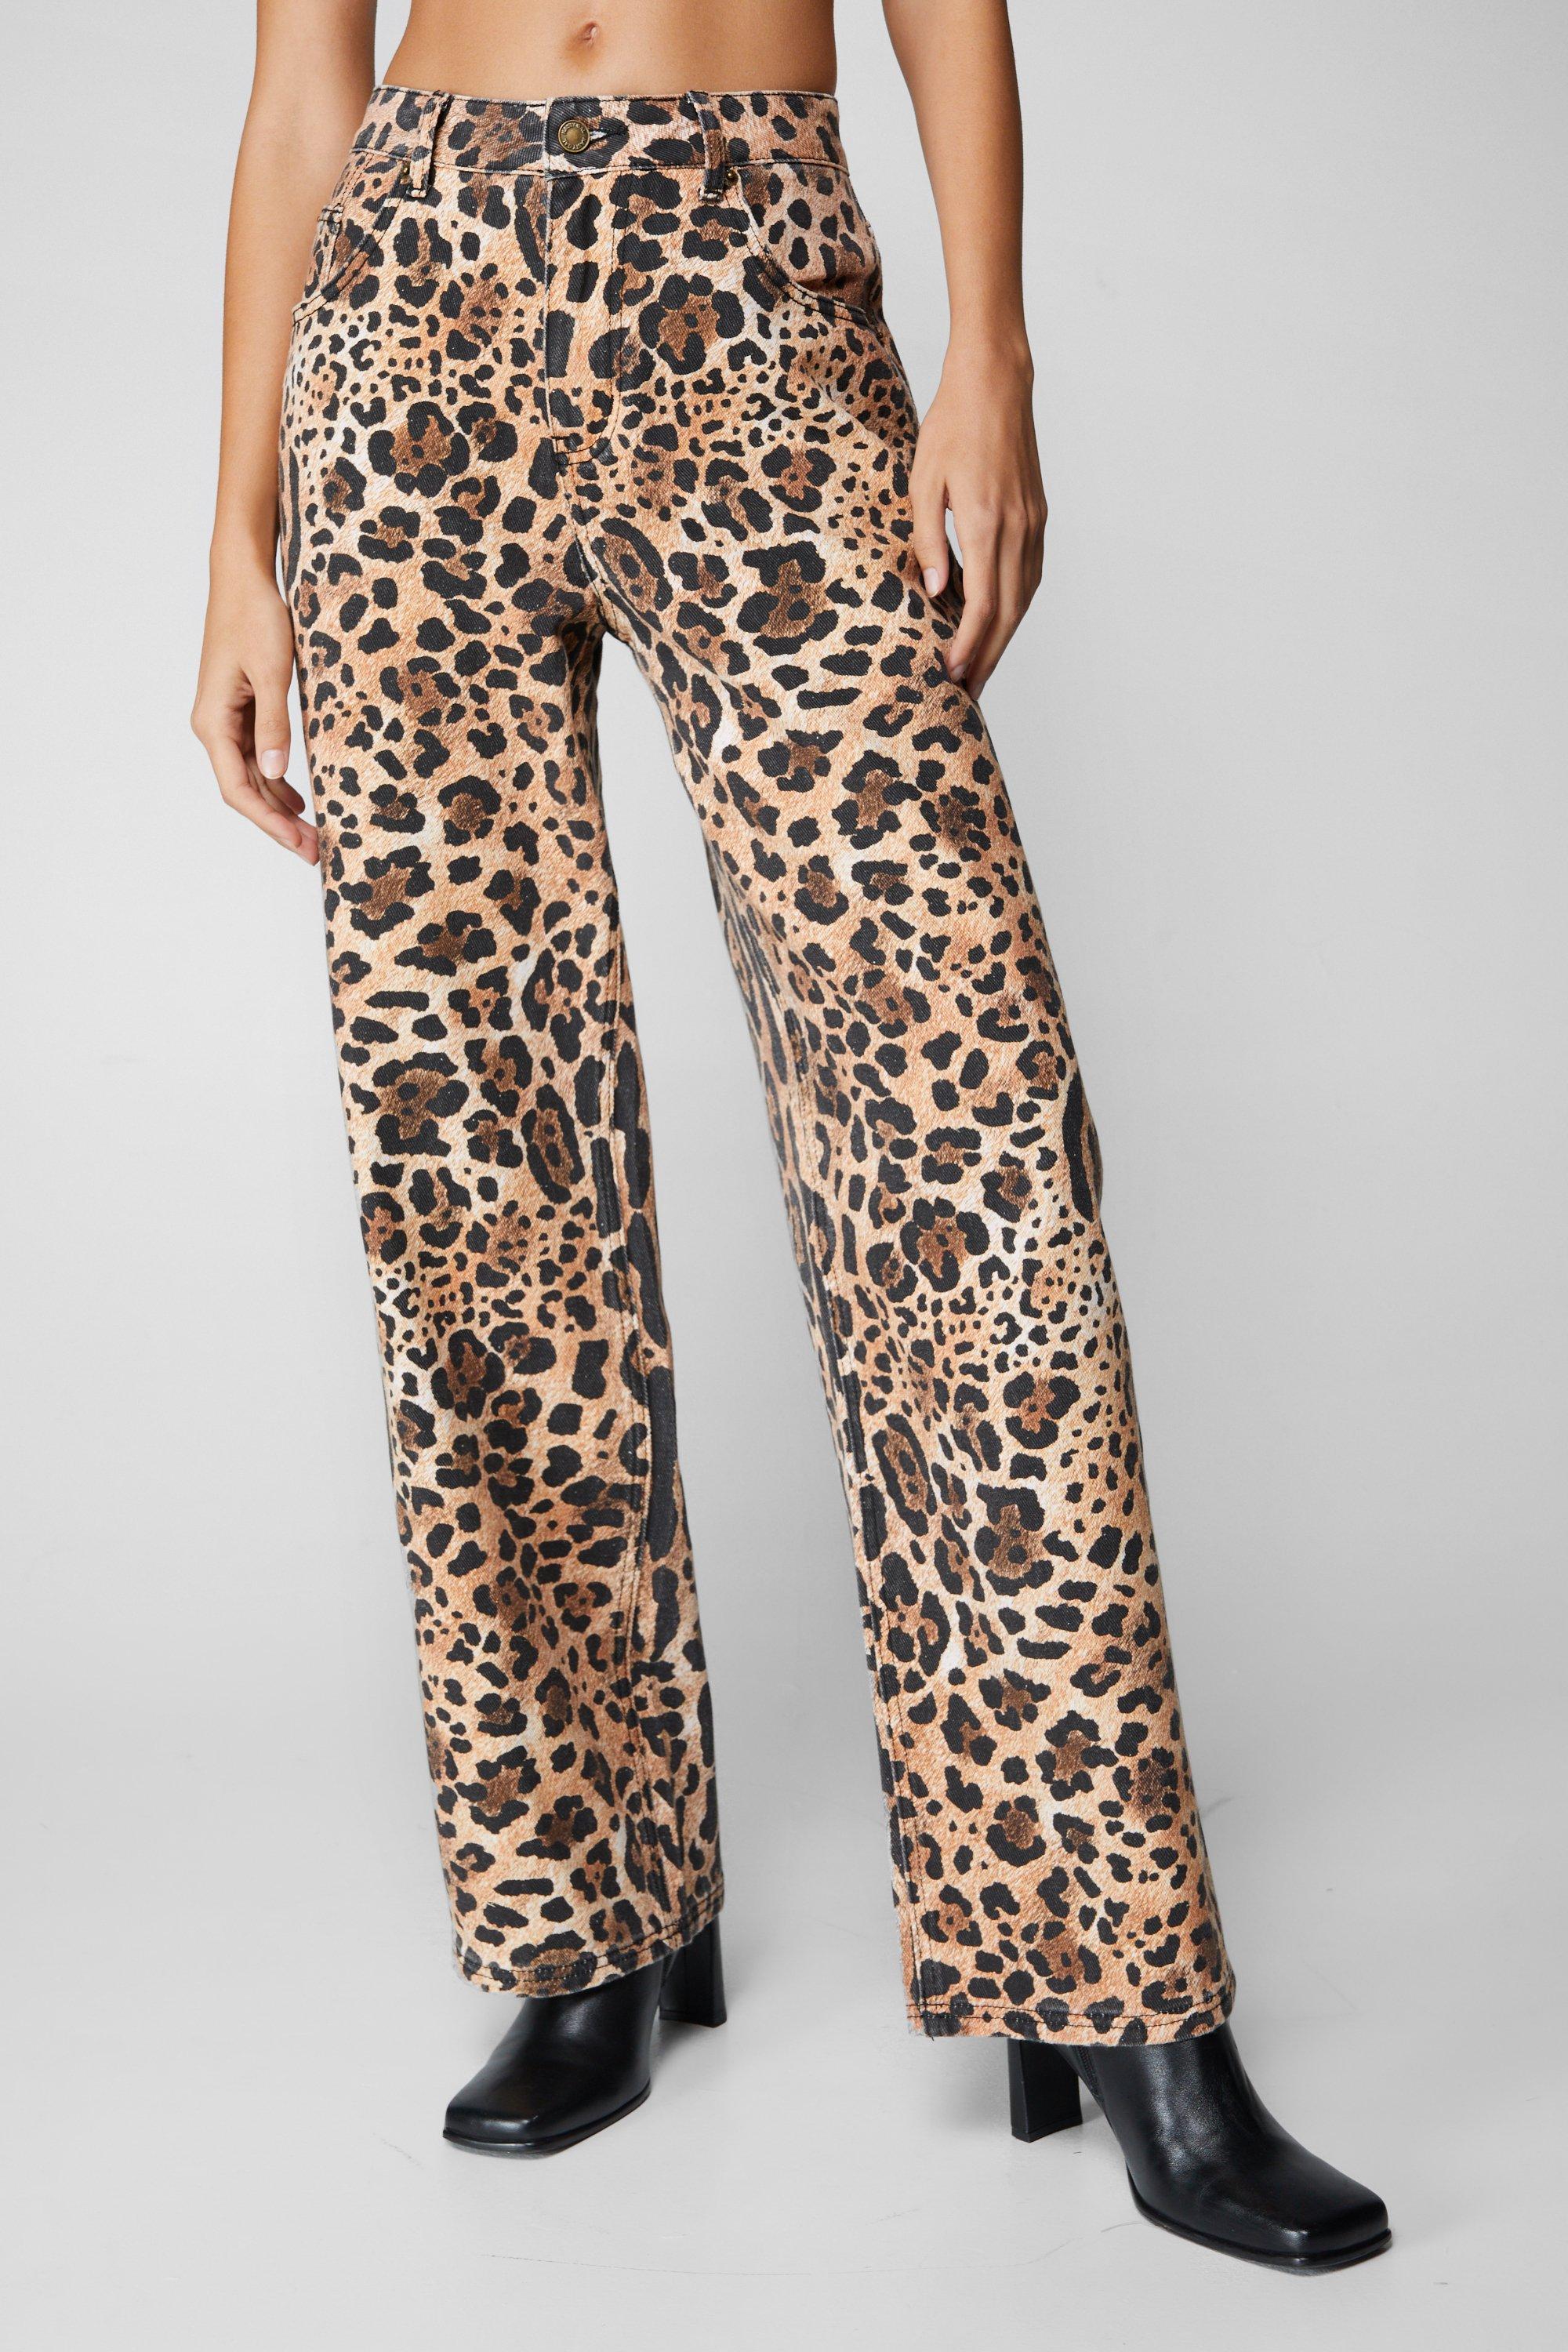 Target Cuffed Denim Shorts, Leopard Leggings, Jeanswest Bl…